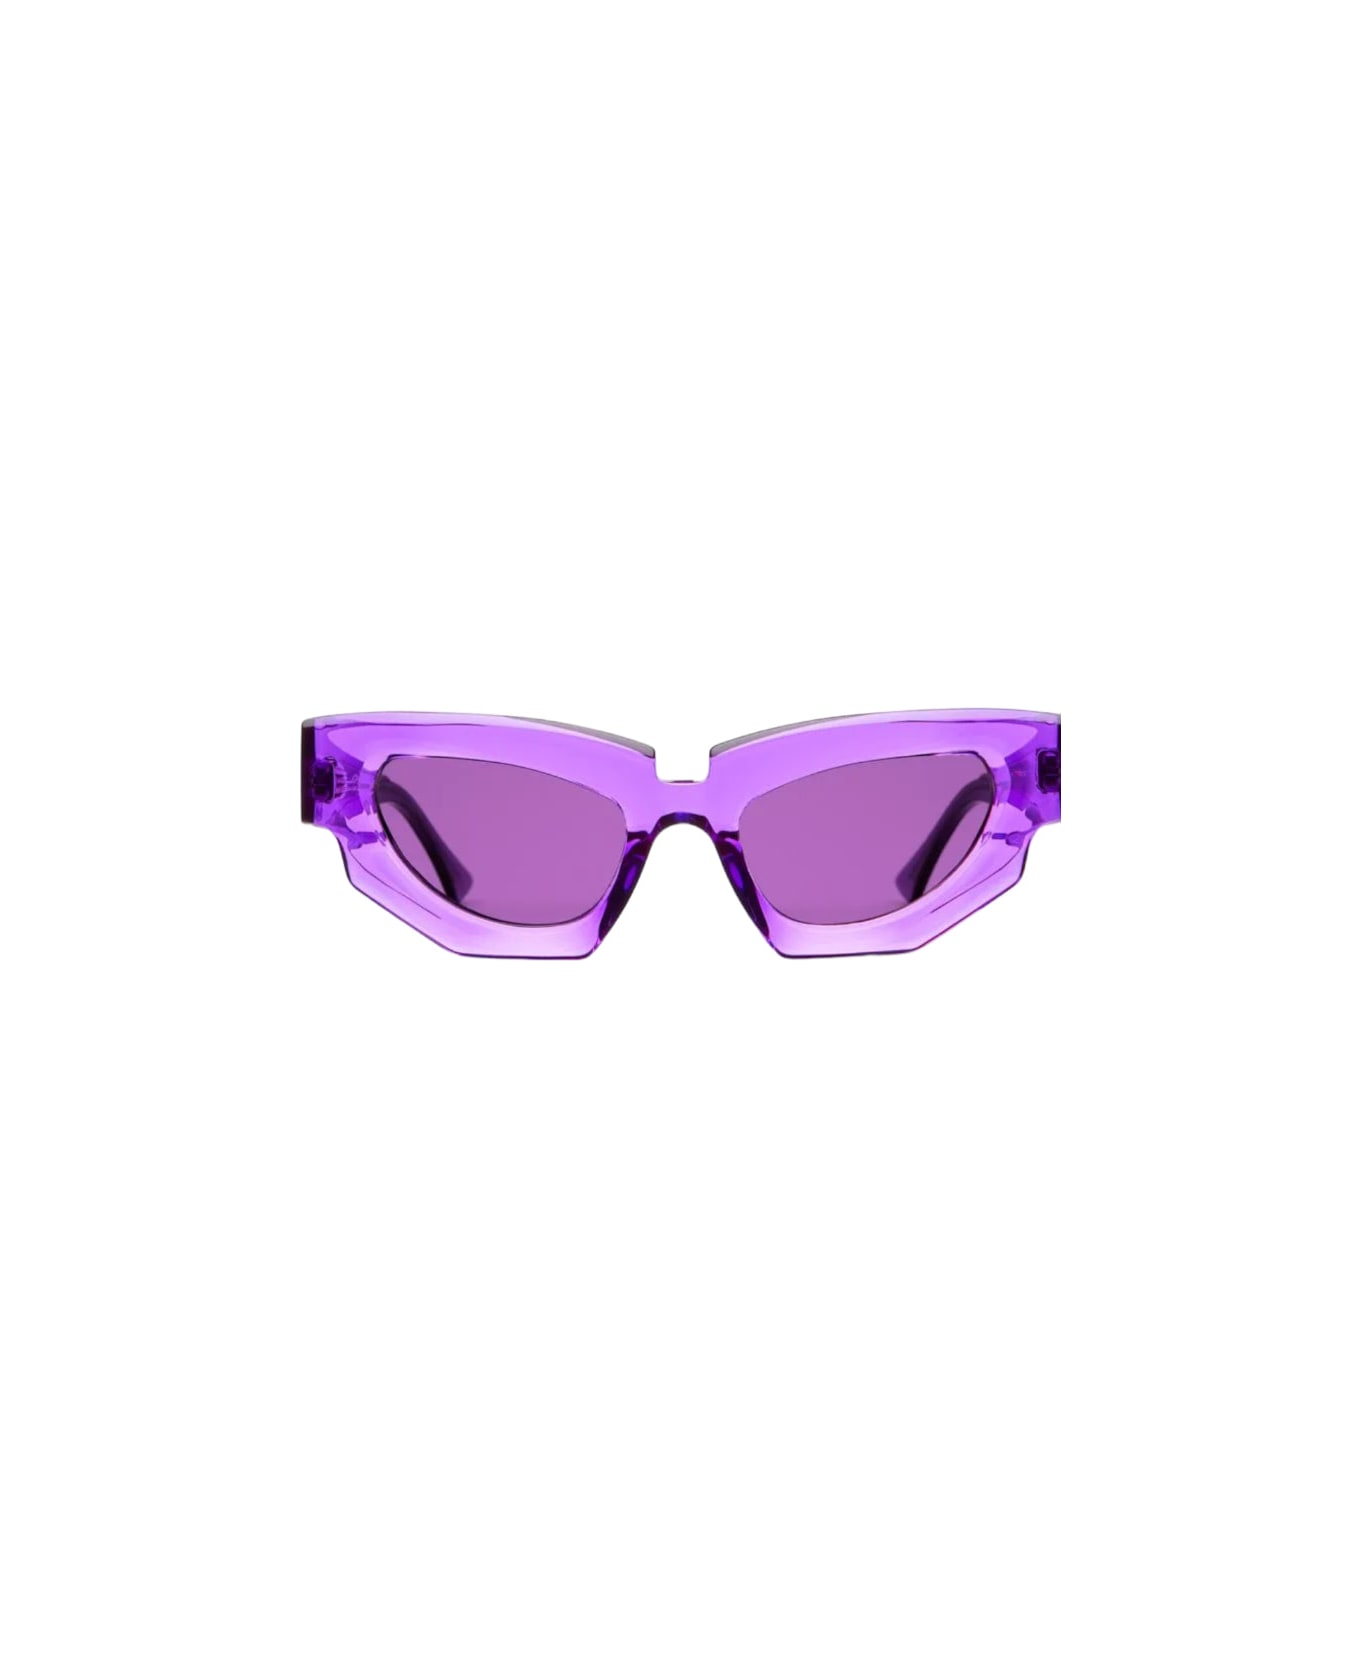 Kuboraum Maske F5 Sunglasses サングラス